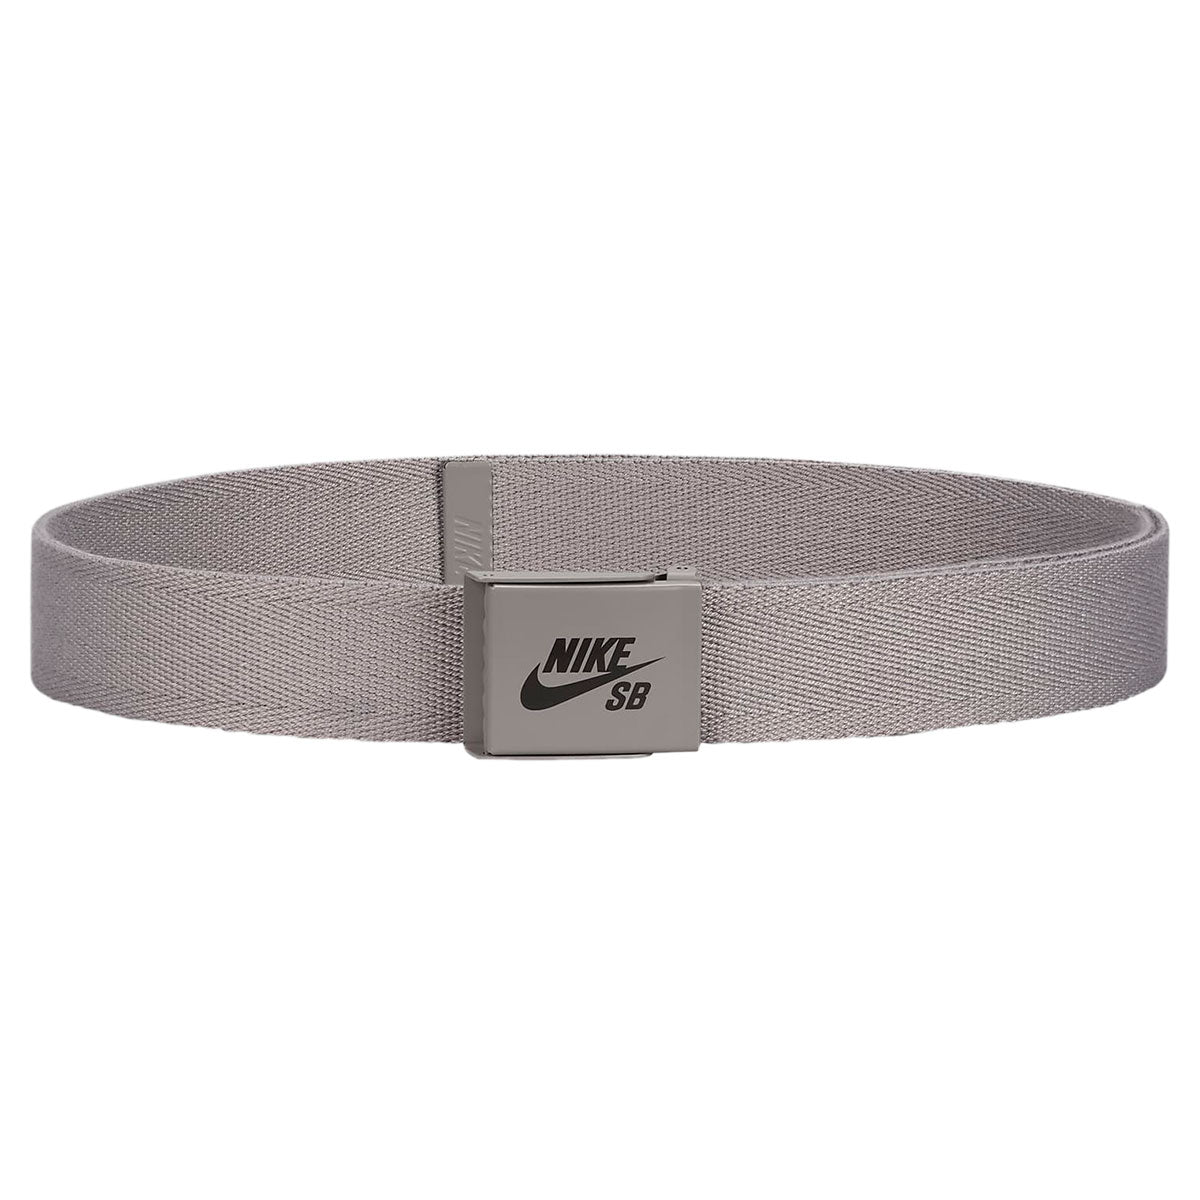 Nike SB Solid Web Belt - Grey image 1